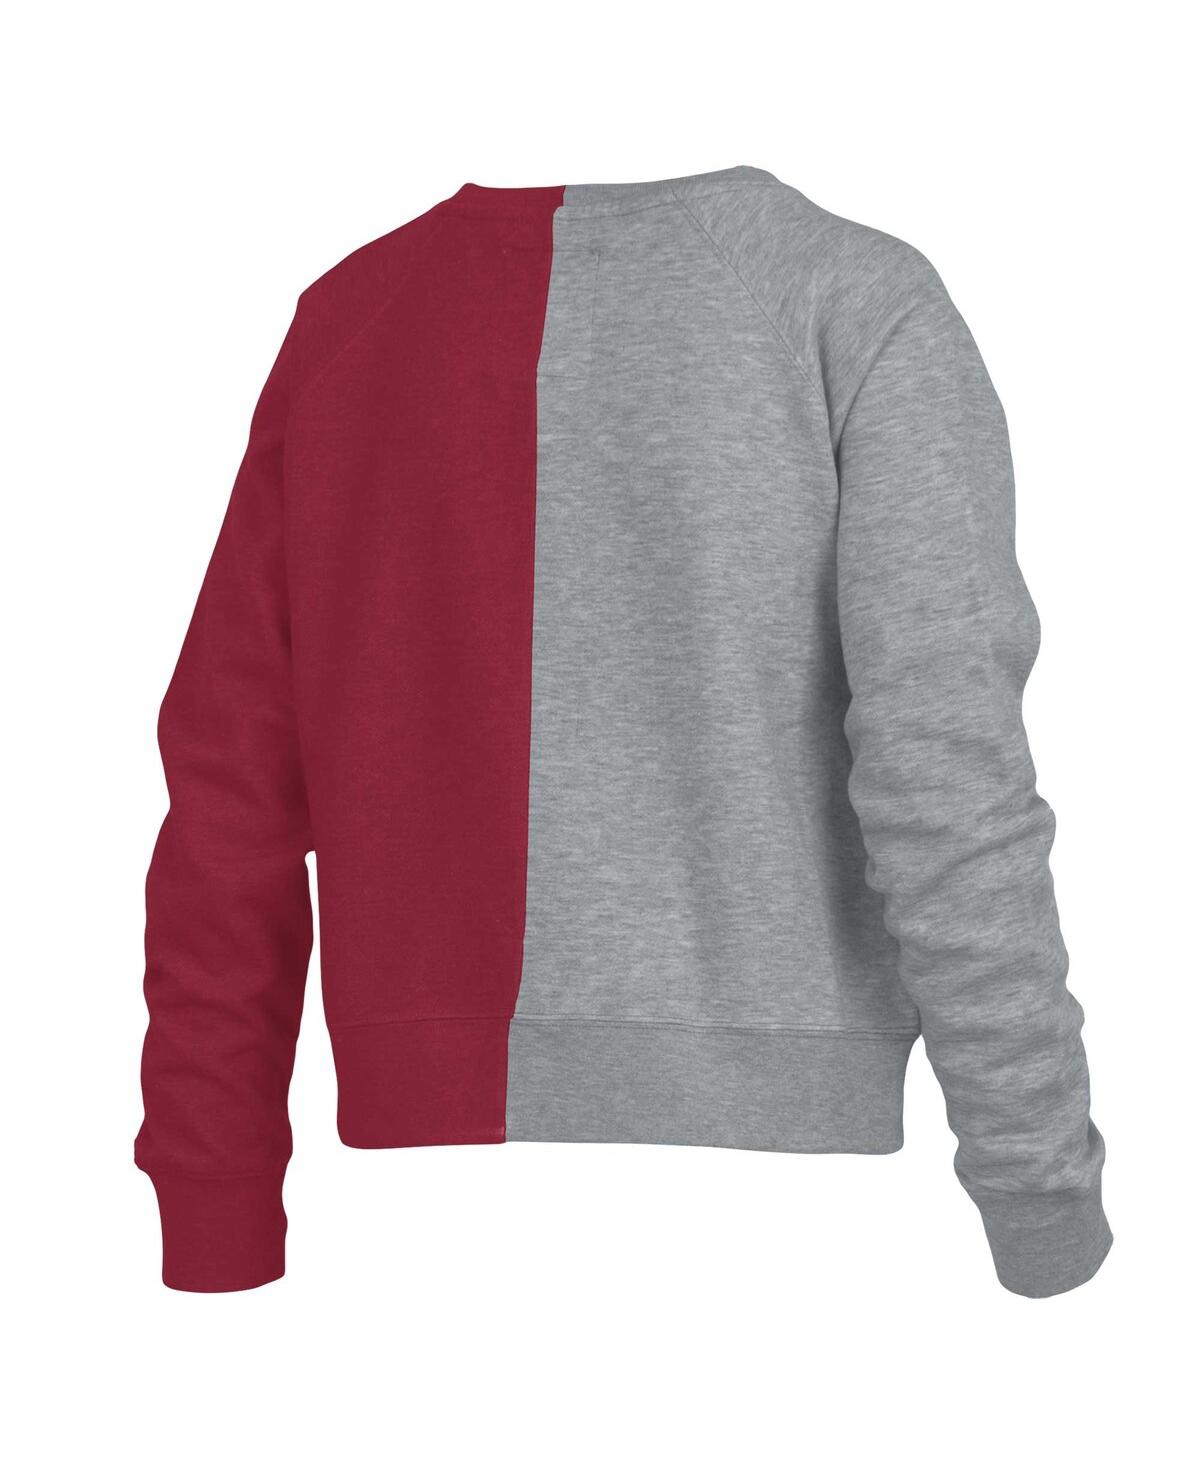 Shop Pressbox Women's  Heather Gray Alabama Crimson Tide Half And Half Raglan Pullover Sweatshirt